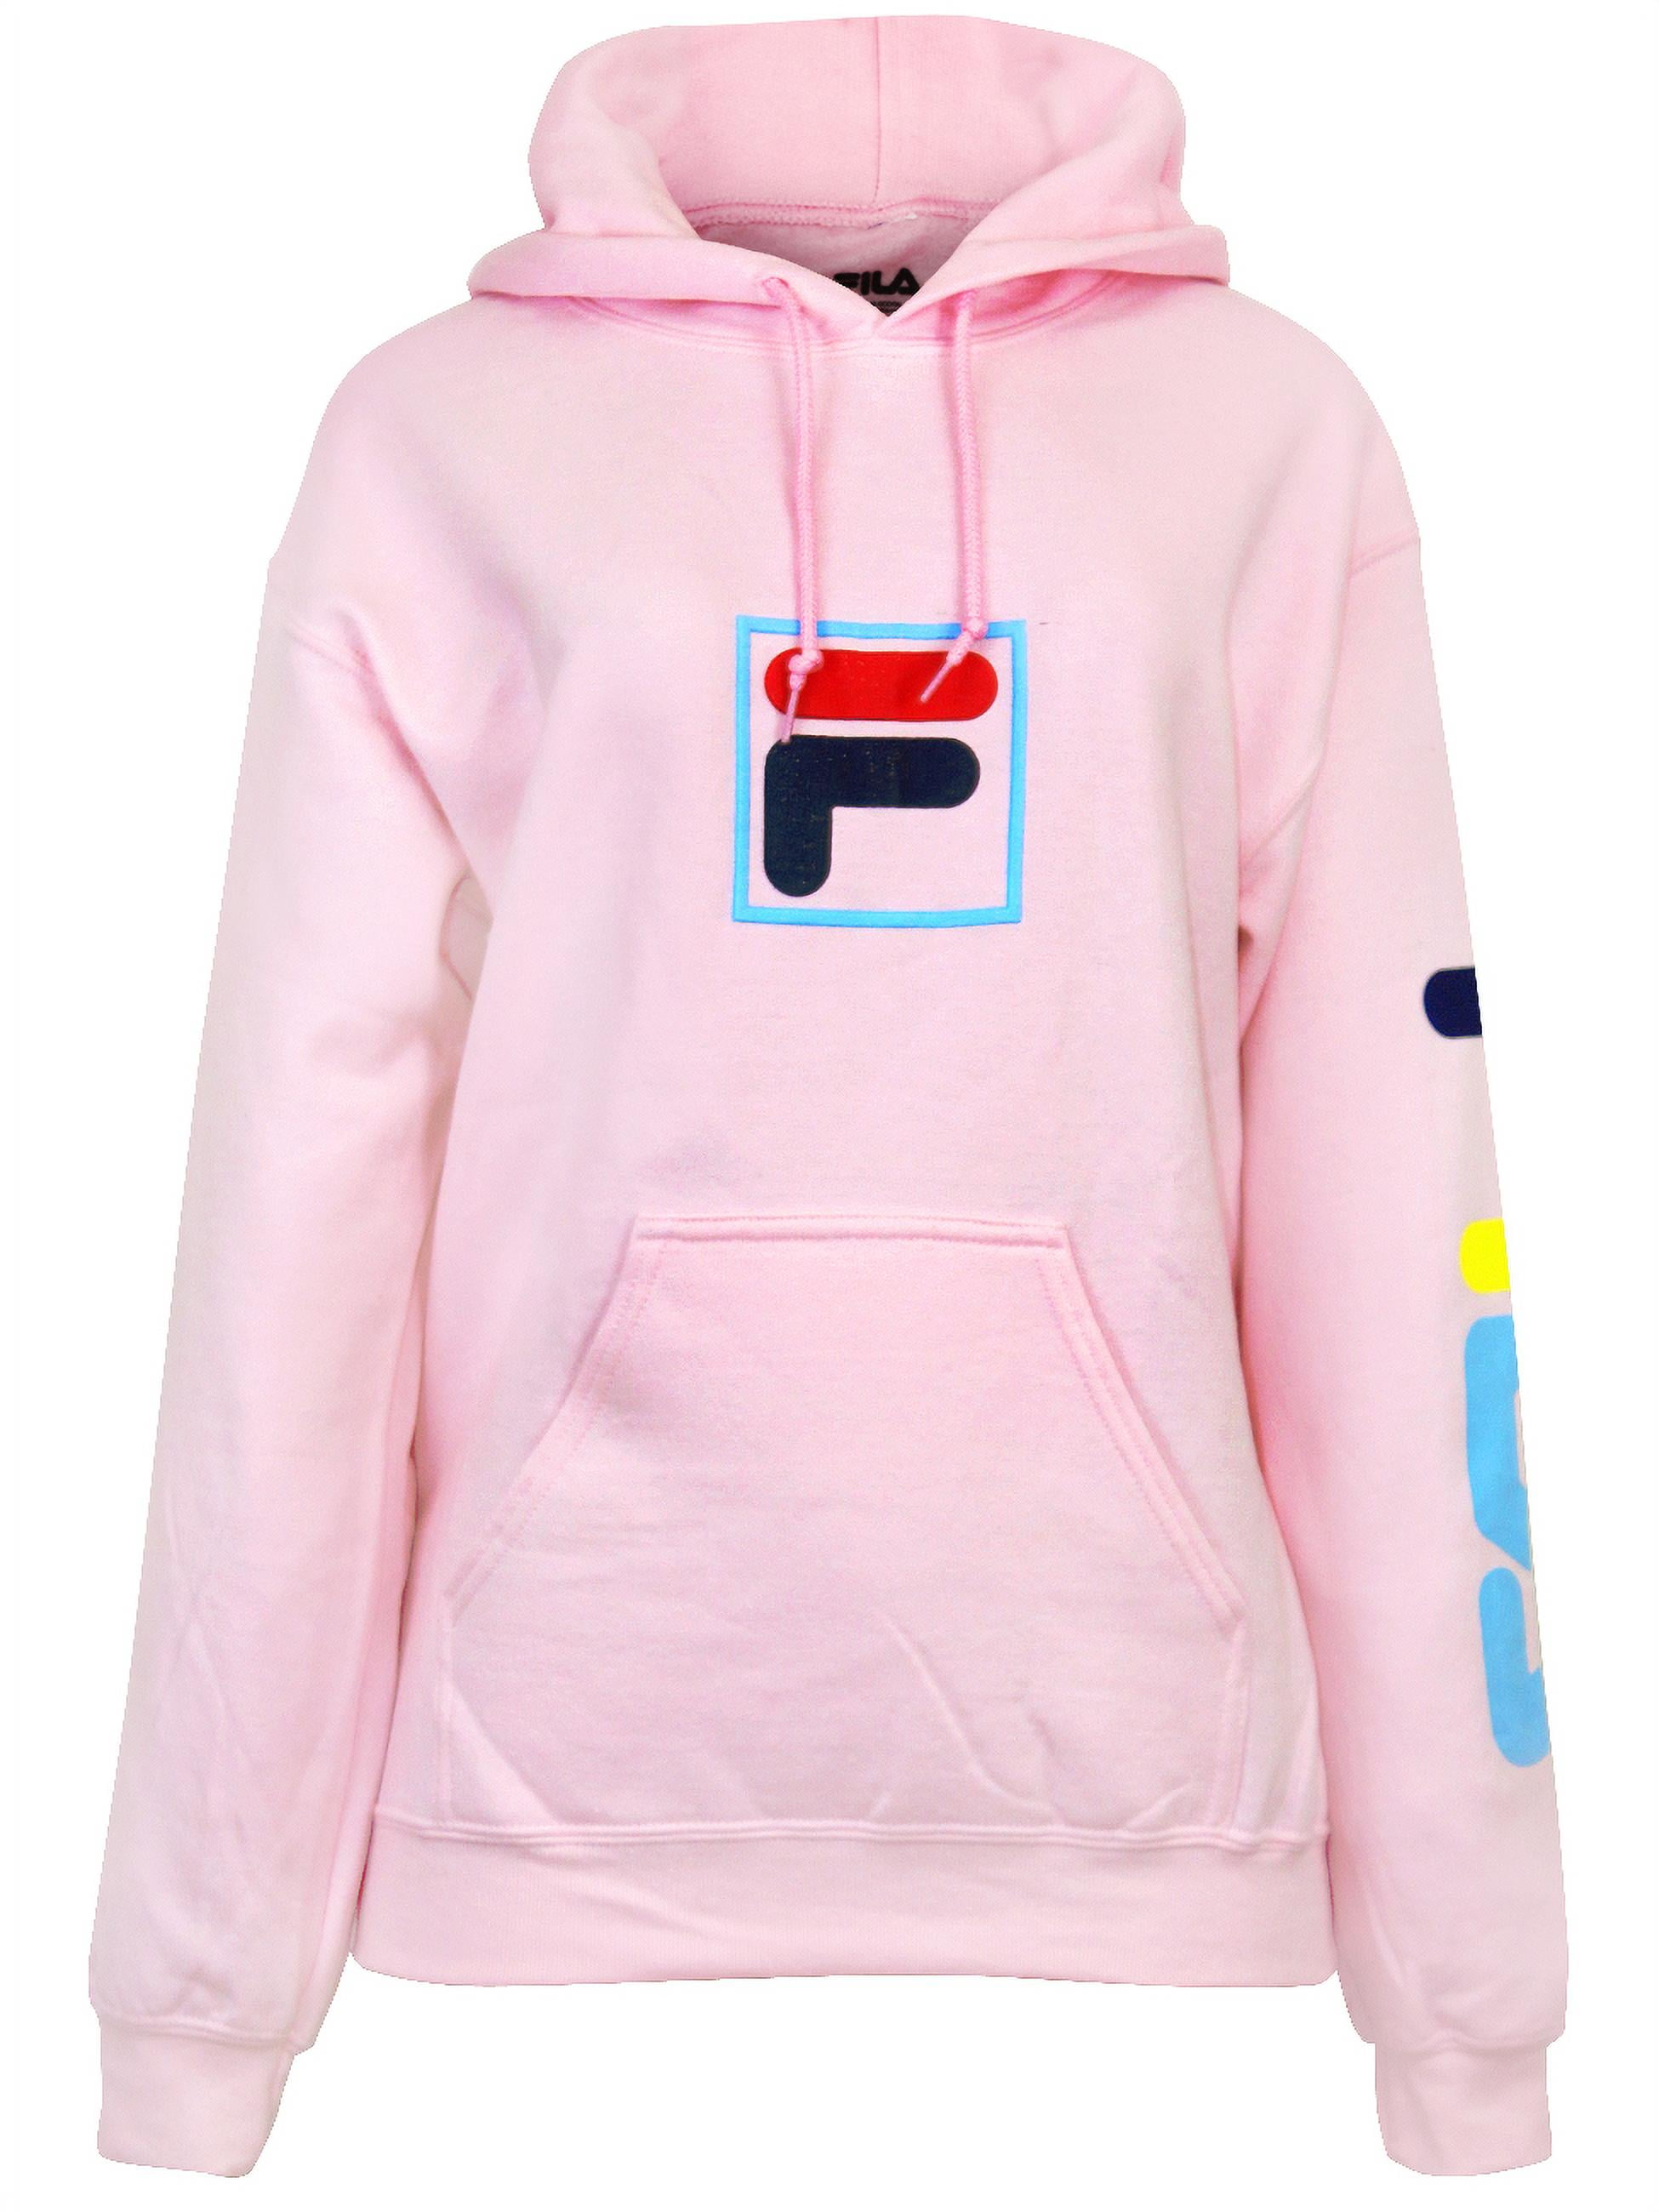 Fila Women's Graphic Fleece with Kangaroo Pocket Pink - Walmart.com